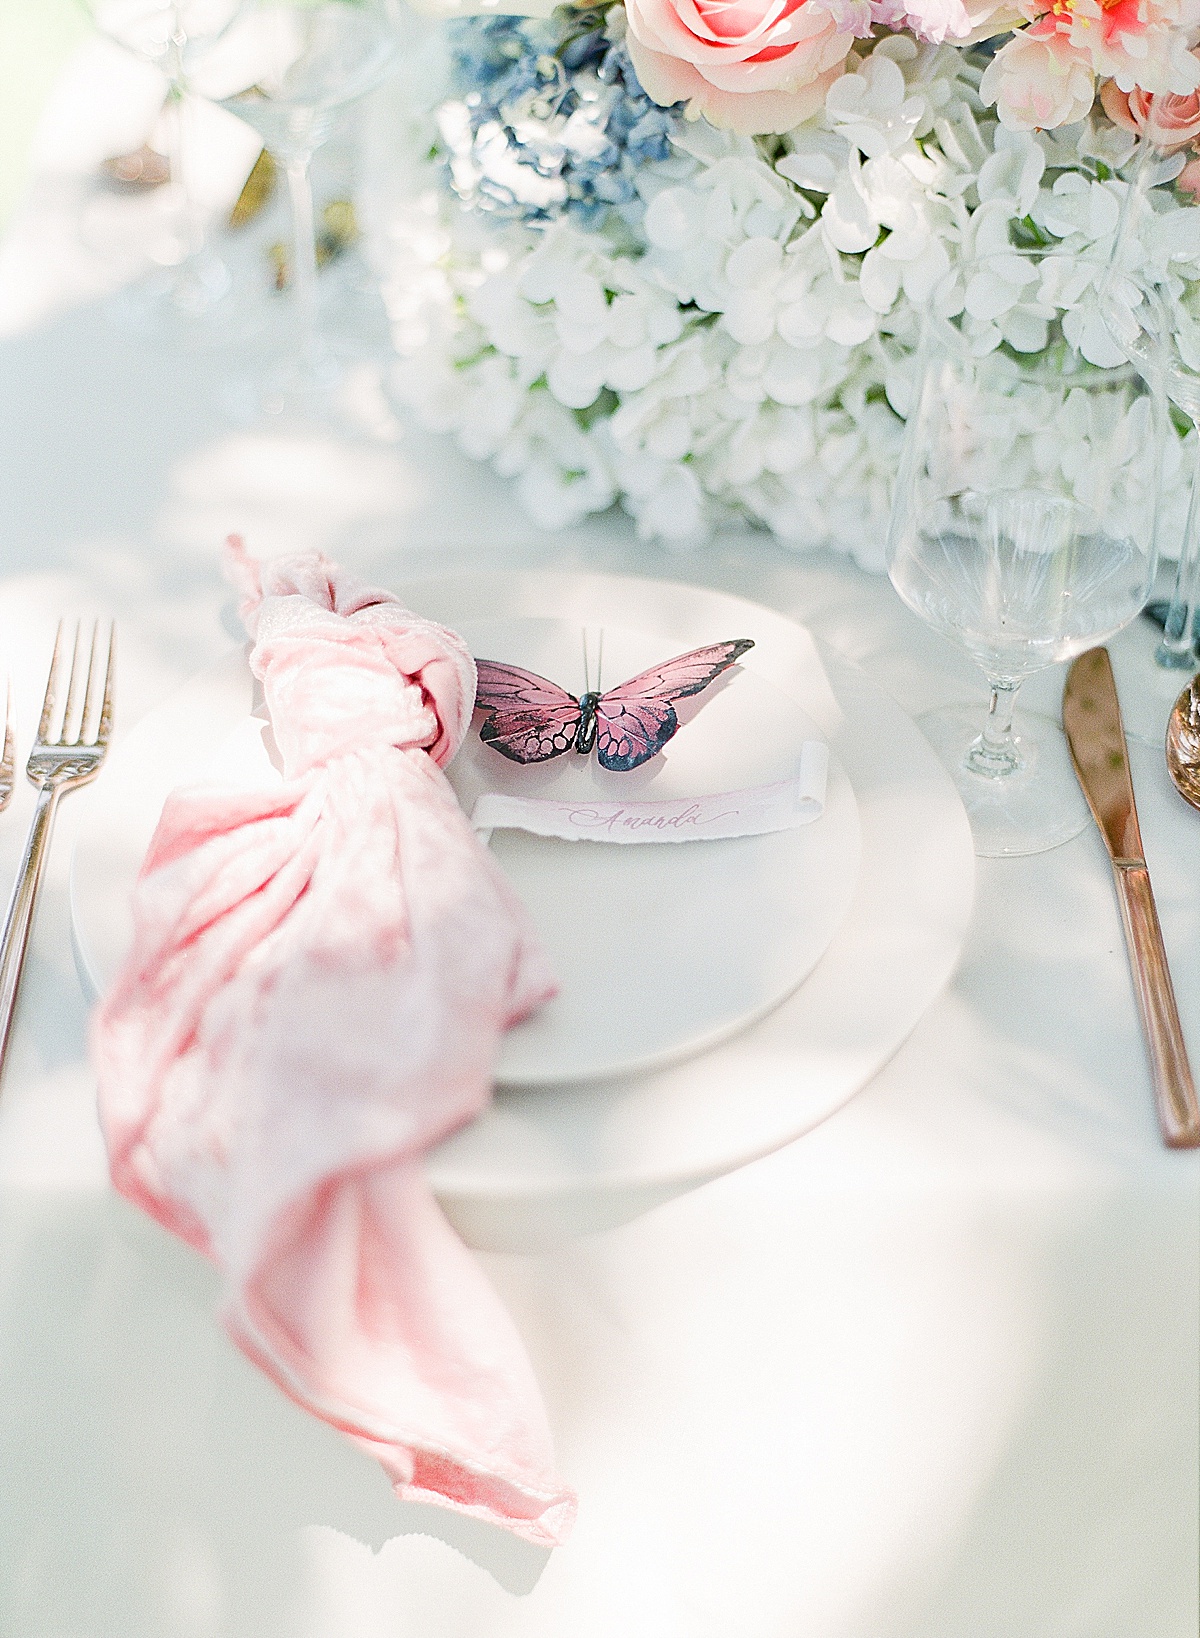 Pastel Wedding Reception Table Setting Photo 